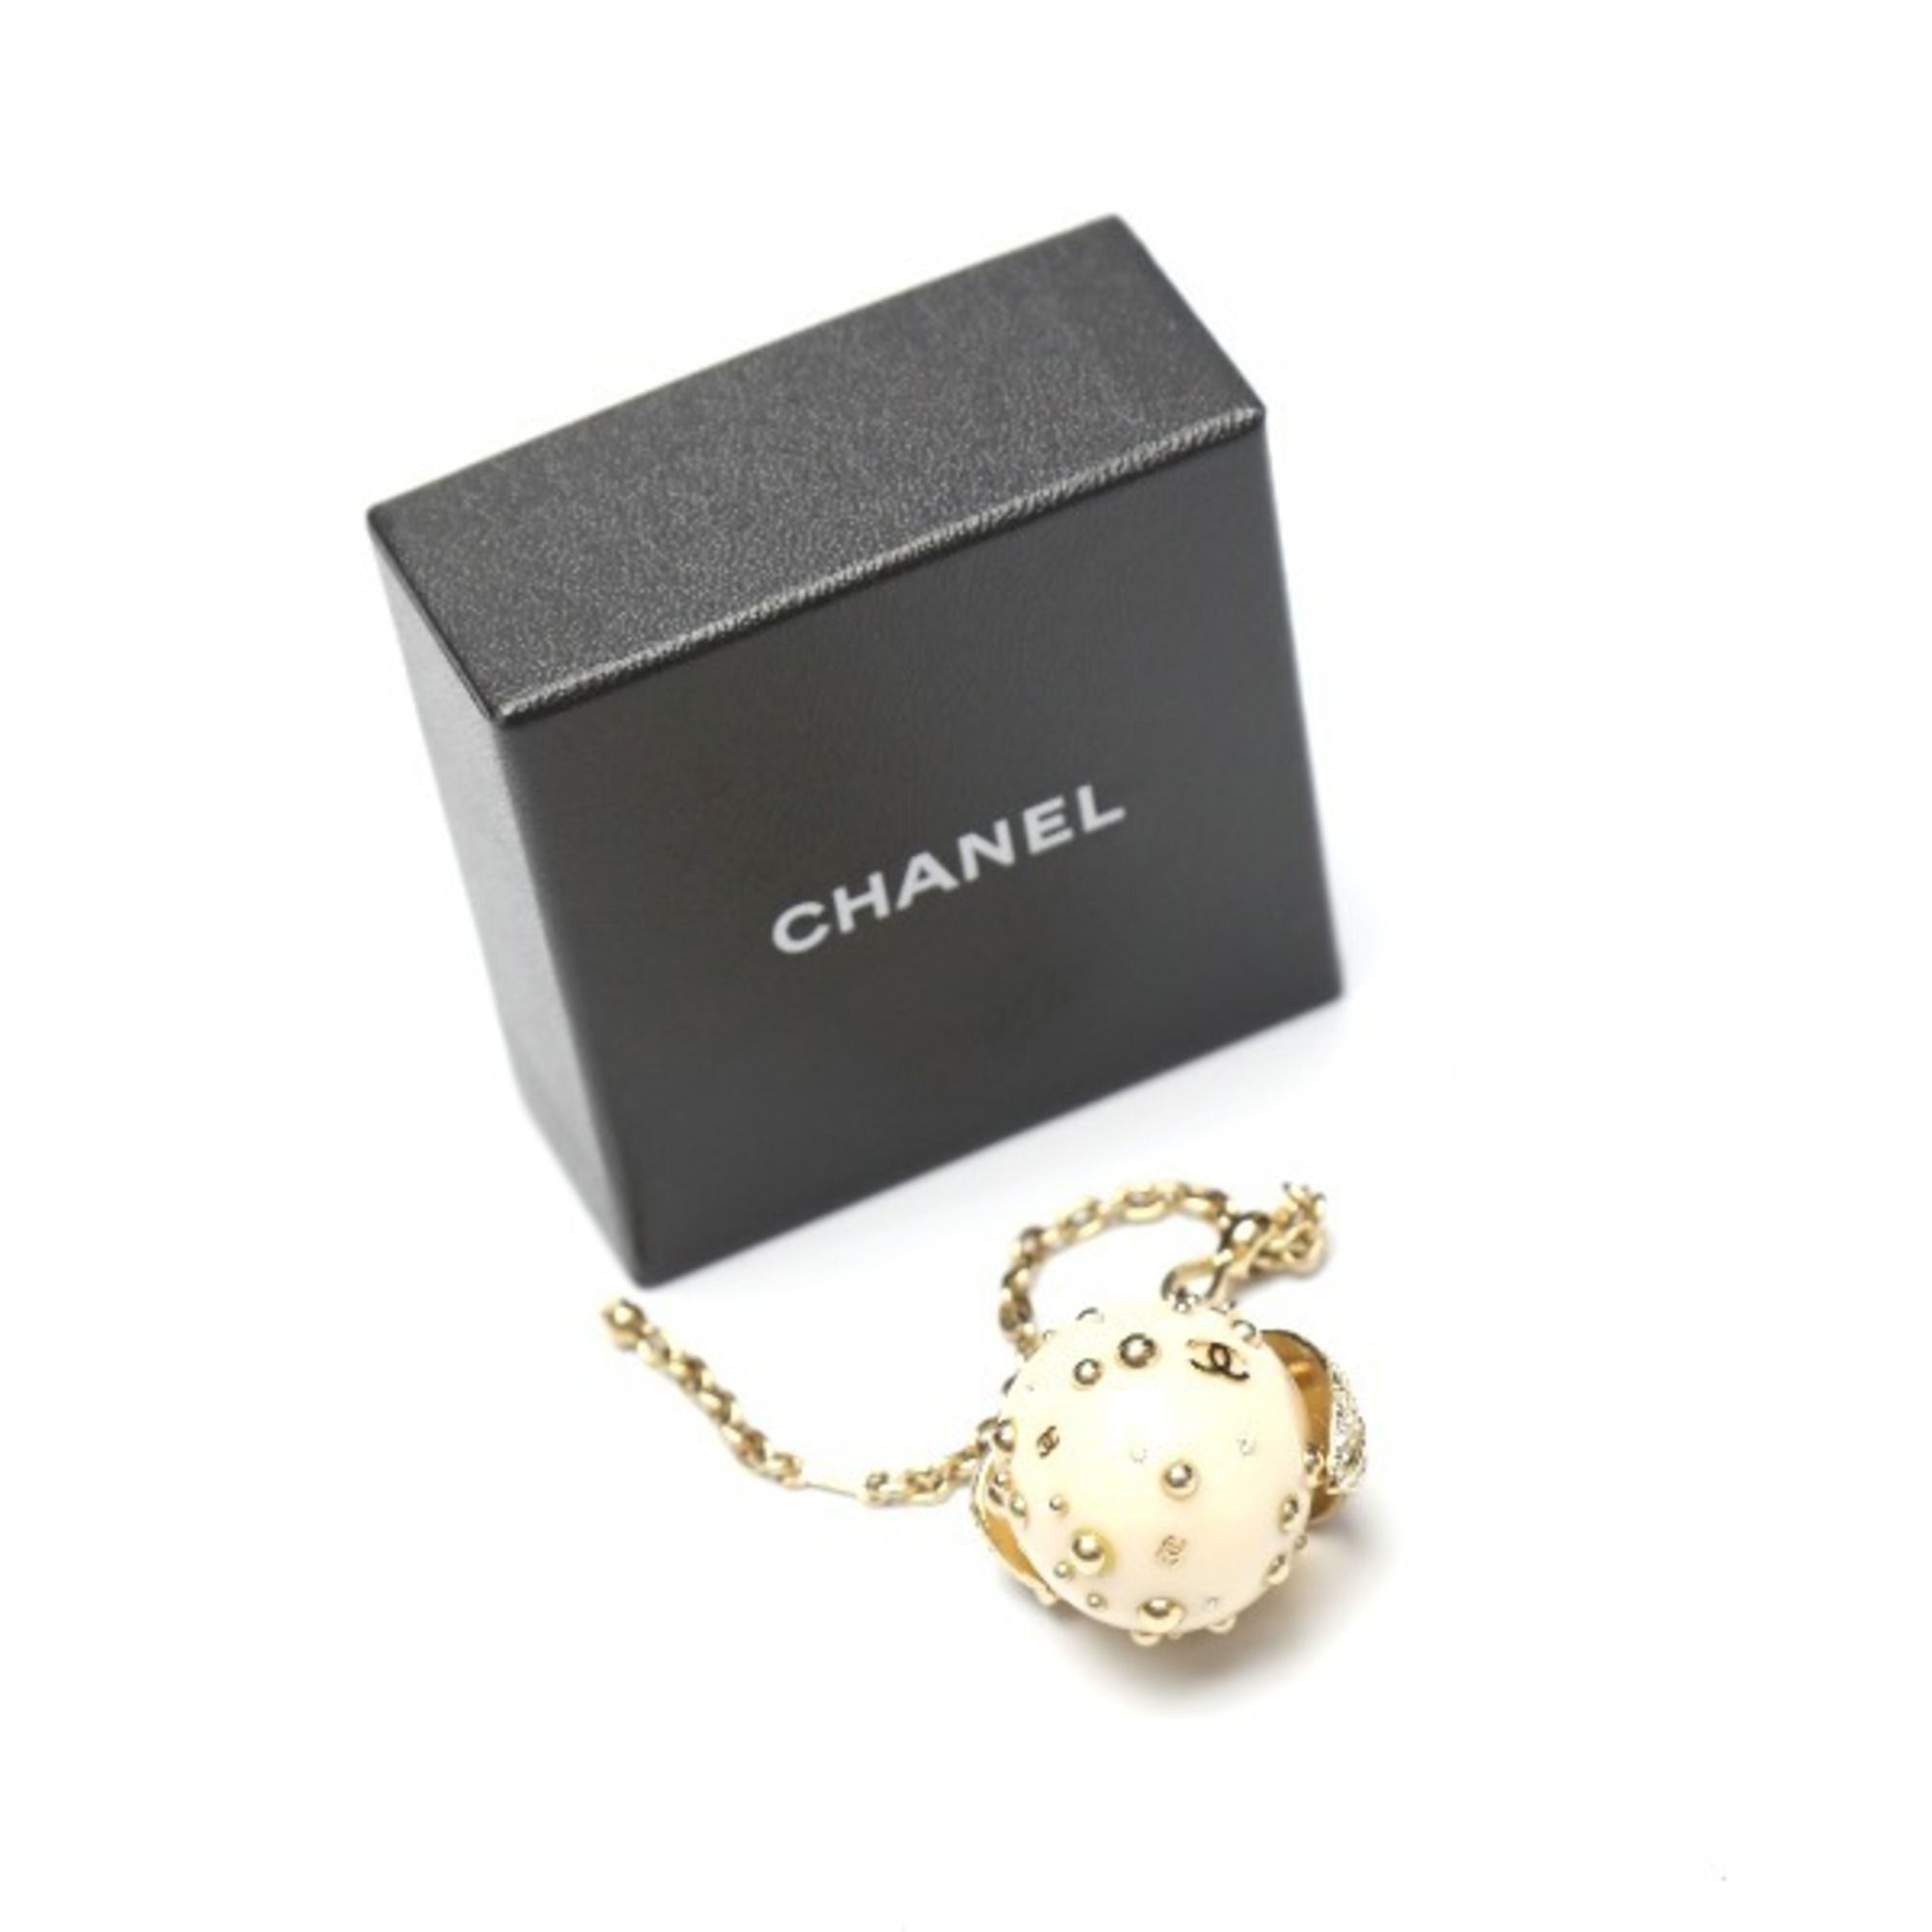 Chanel CHANEL charm gold